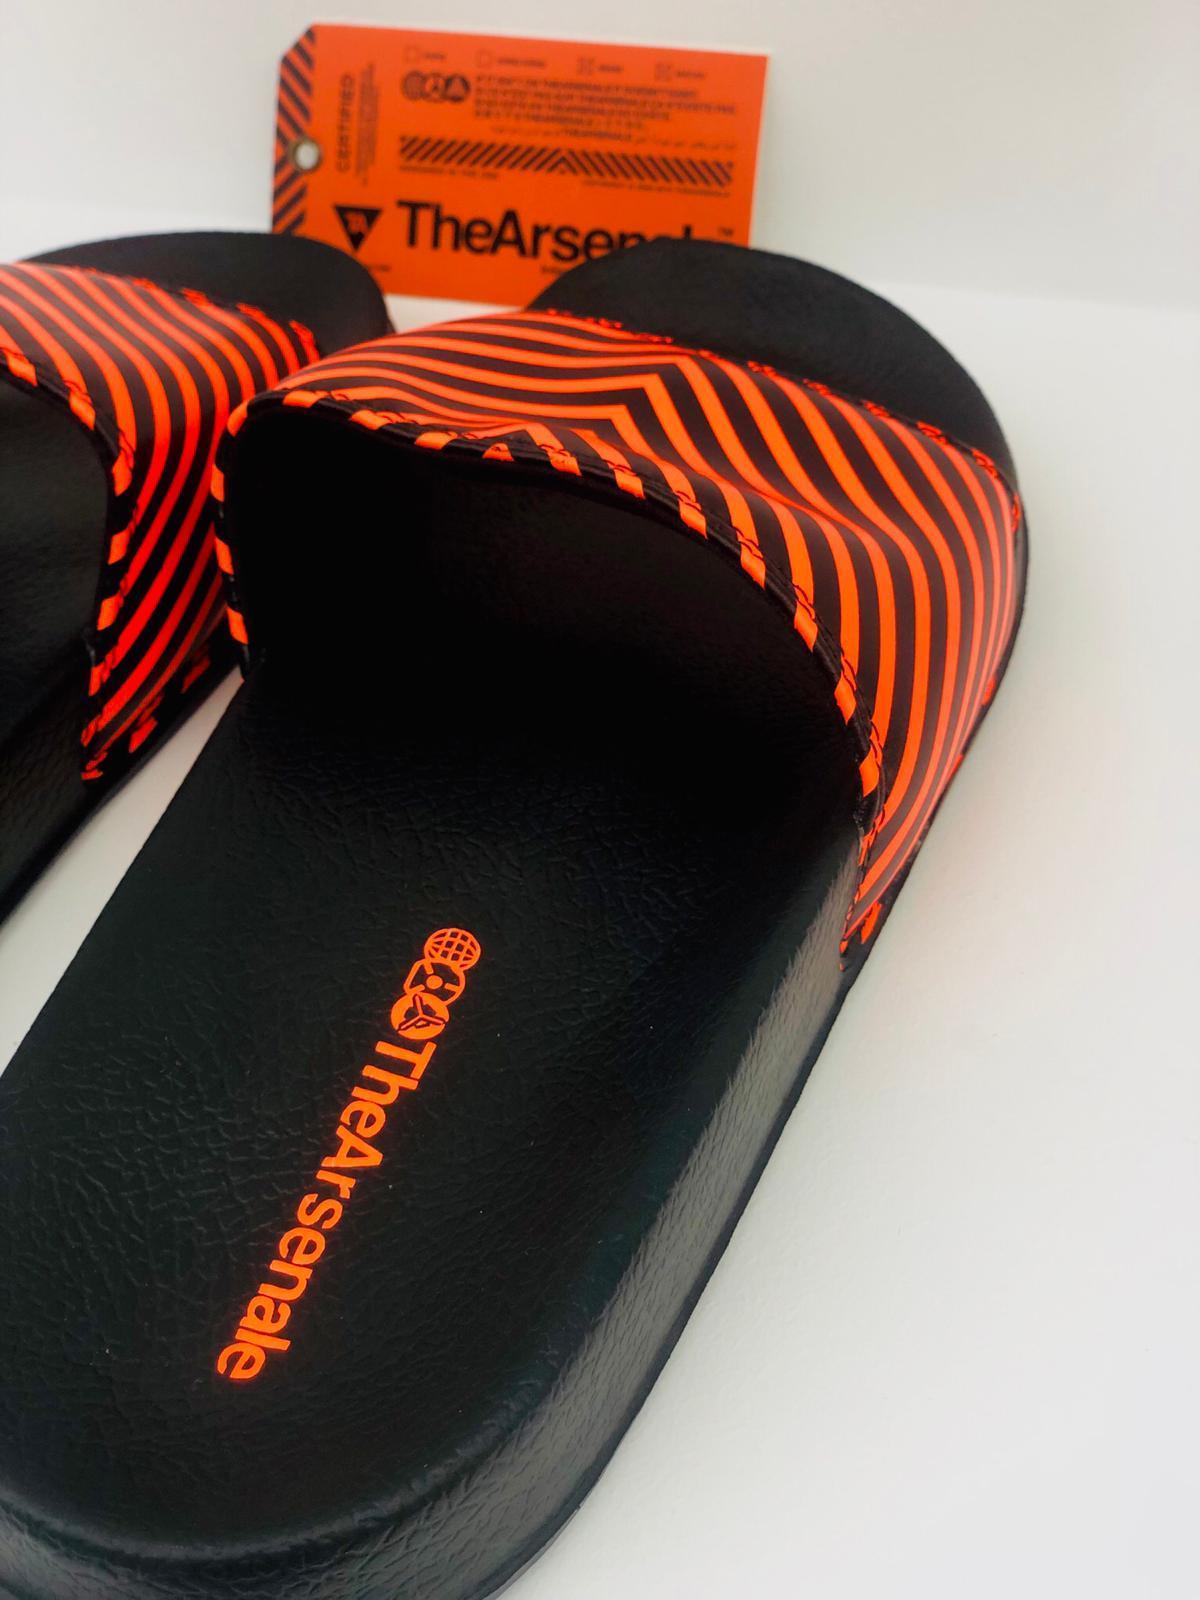 TheArsenale Slides- Orange/Black - TheArsenale